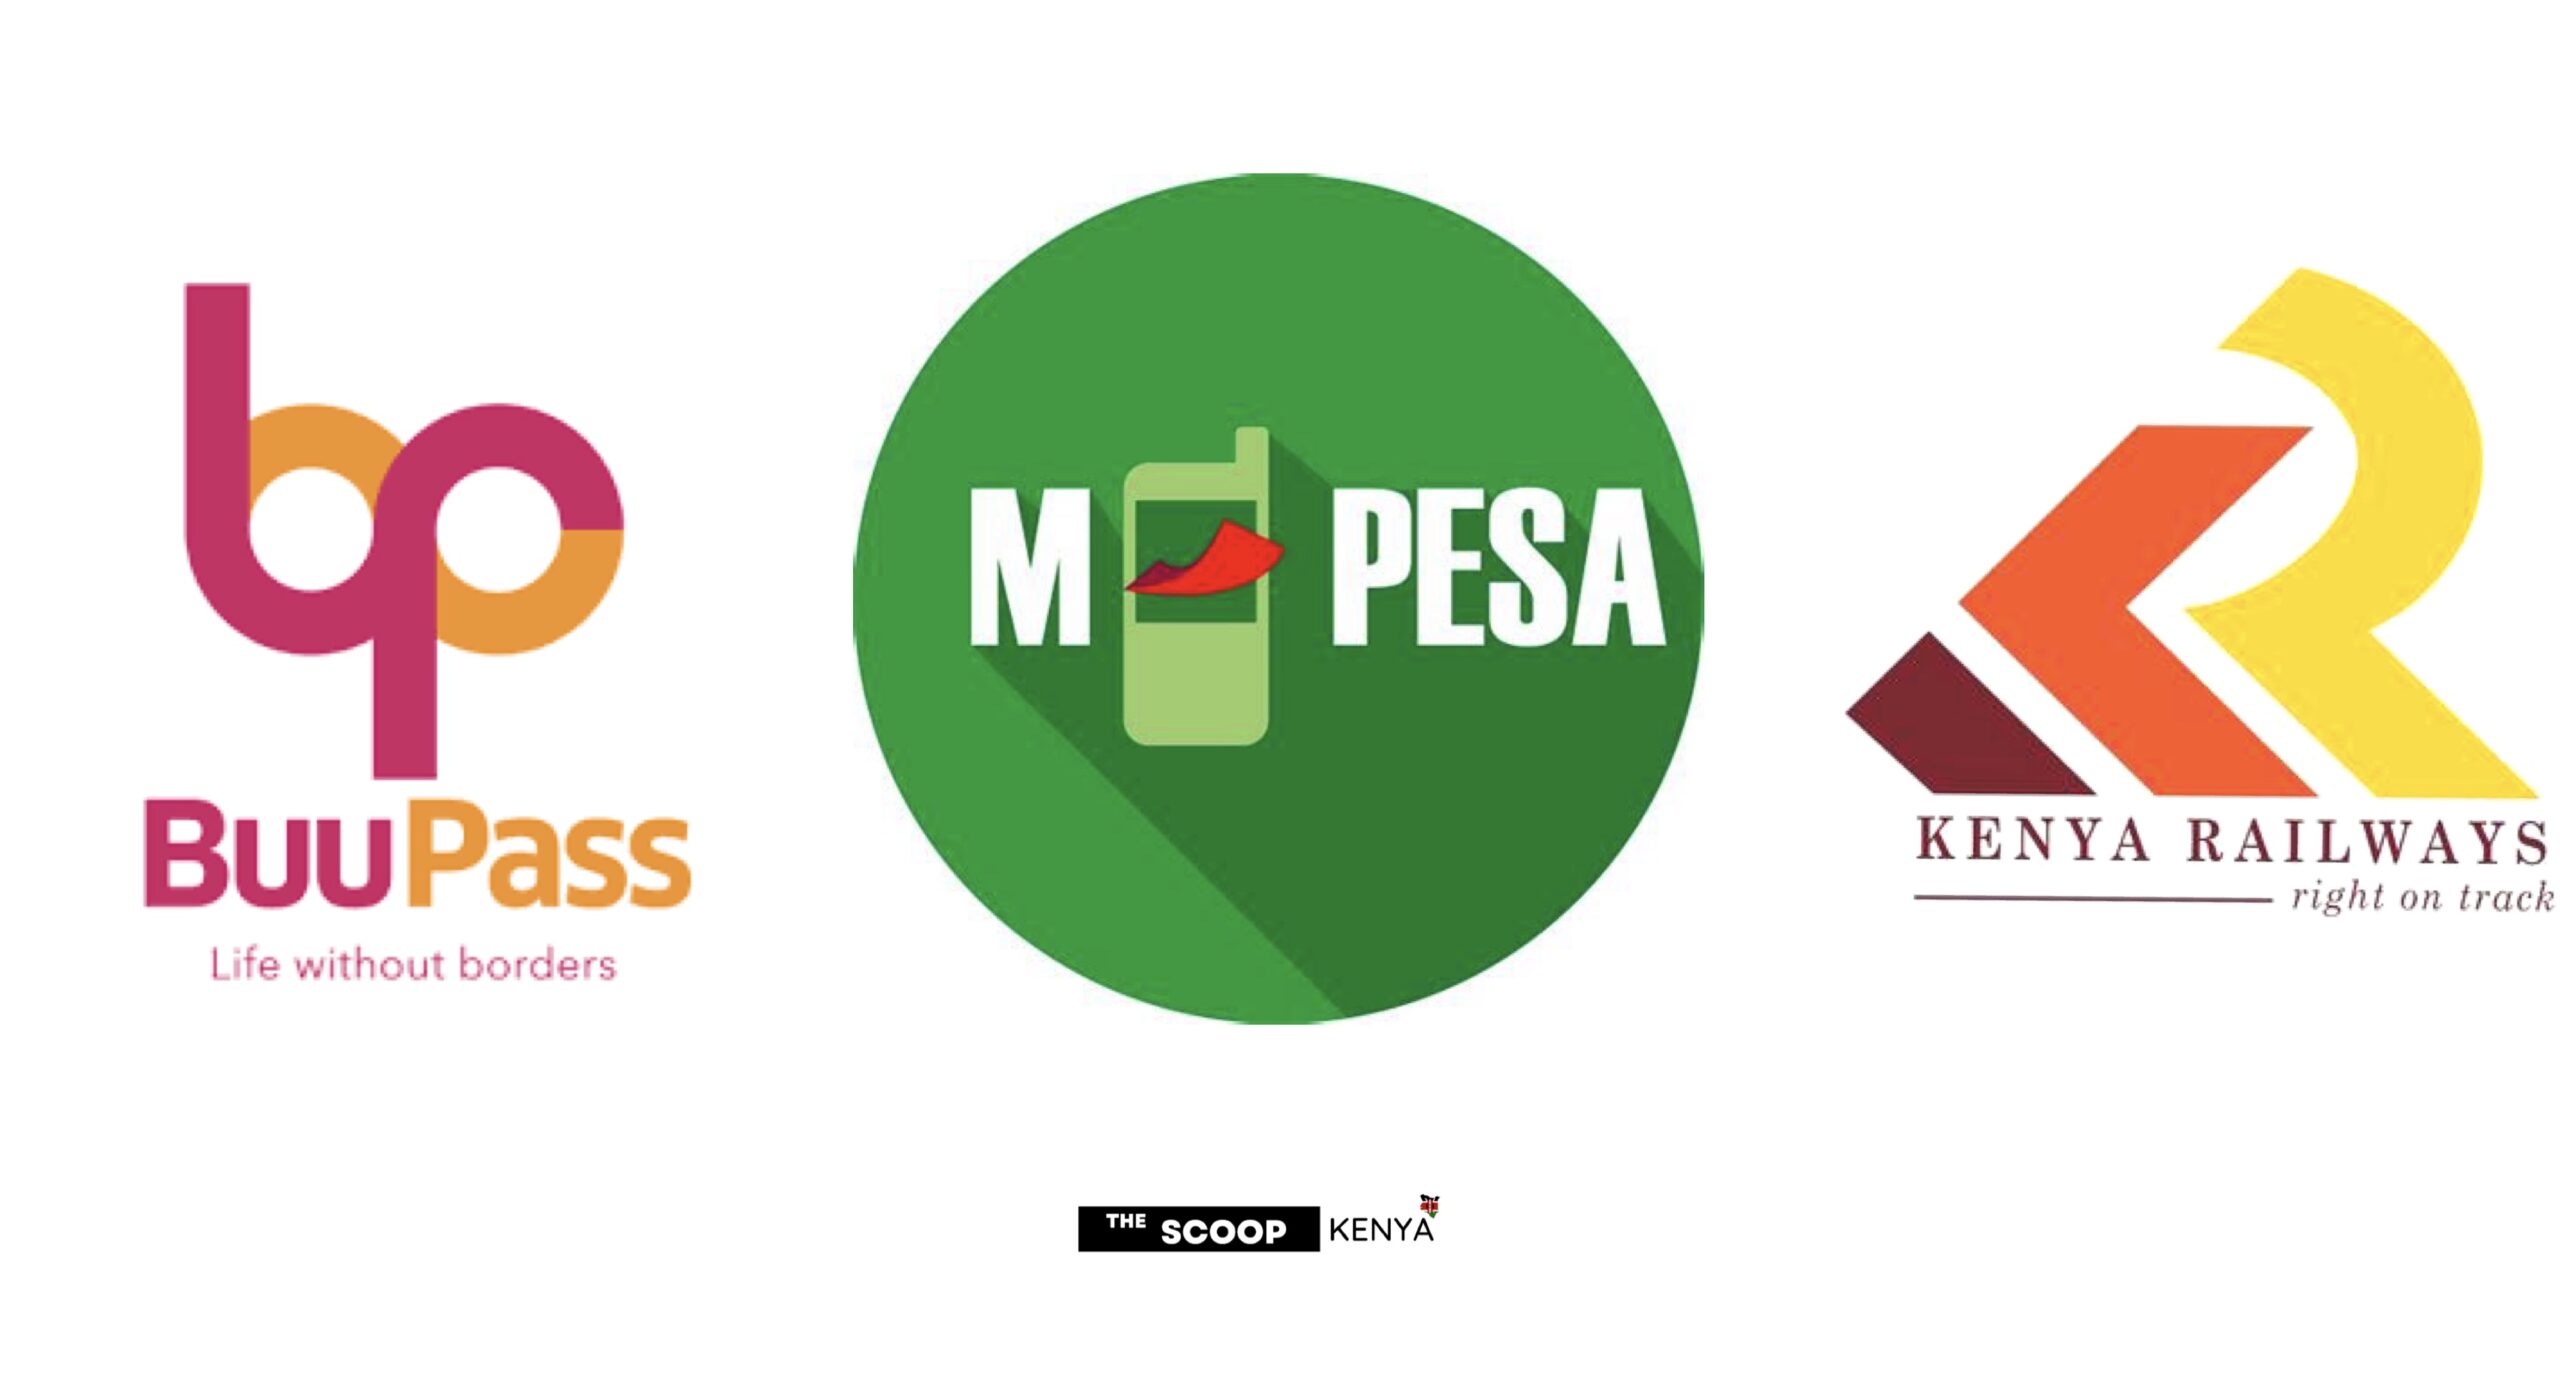 BuuPass, M-PESA and Kenya Railways logos PHOTO/Courtesy